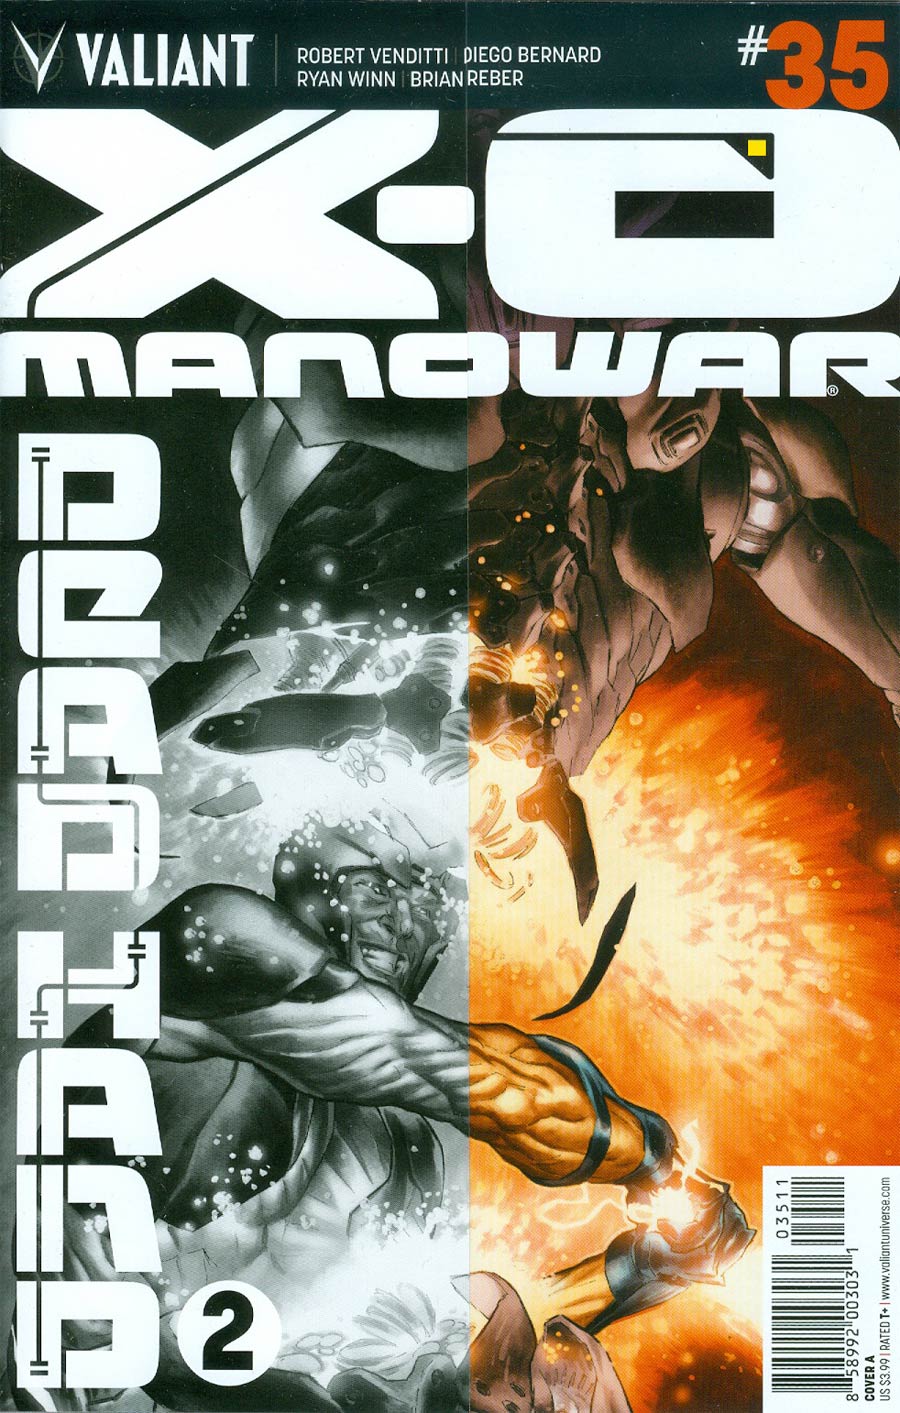 X-O Manowar Vol 3 #35 Cover A Regular Lewis LaRosa Overlay Wraparound Cover